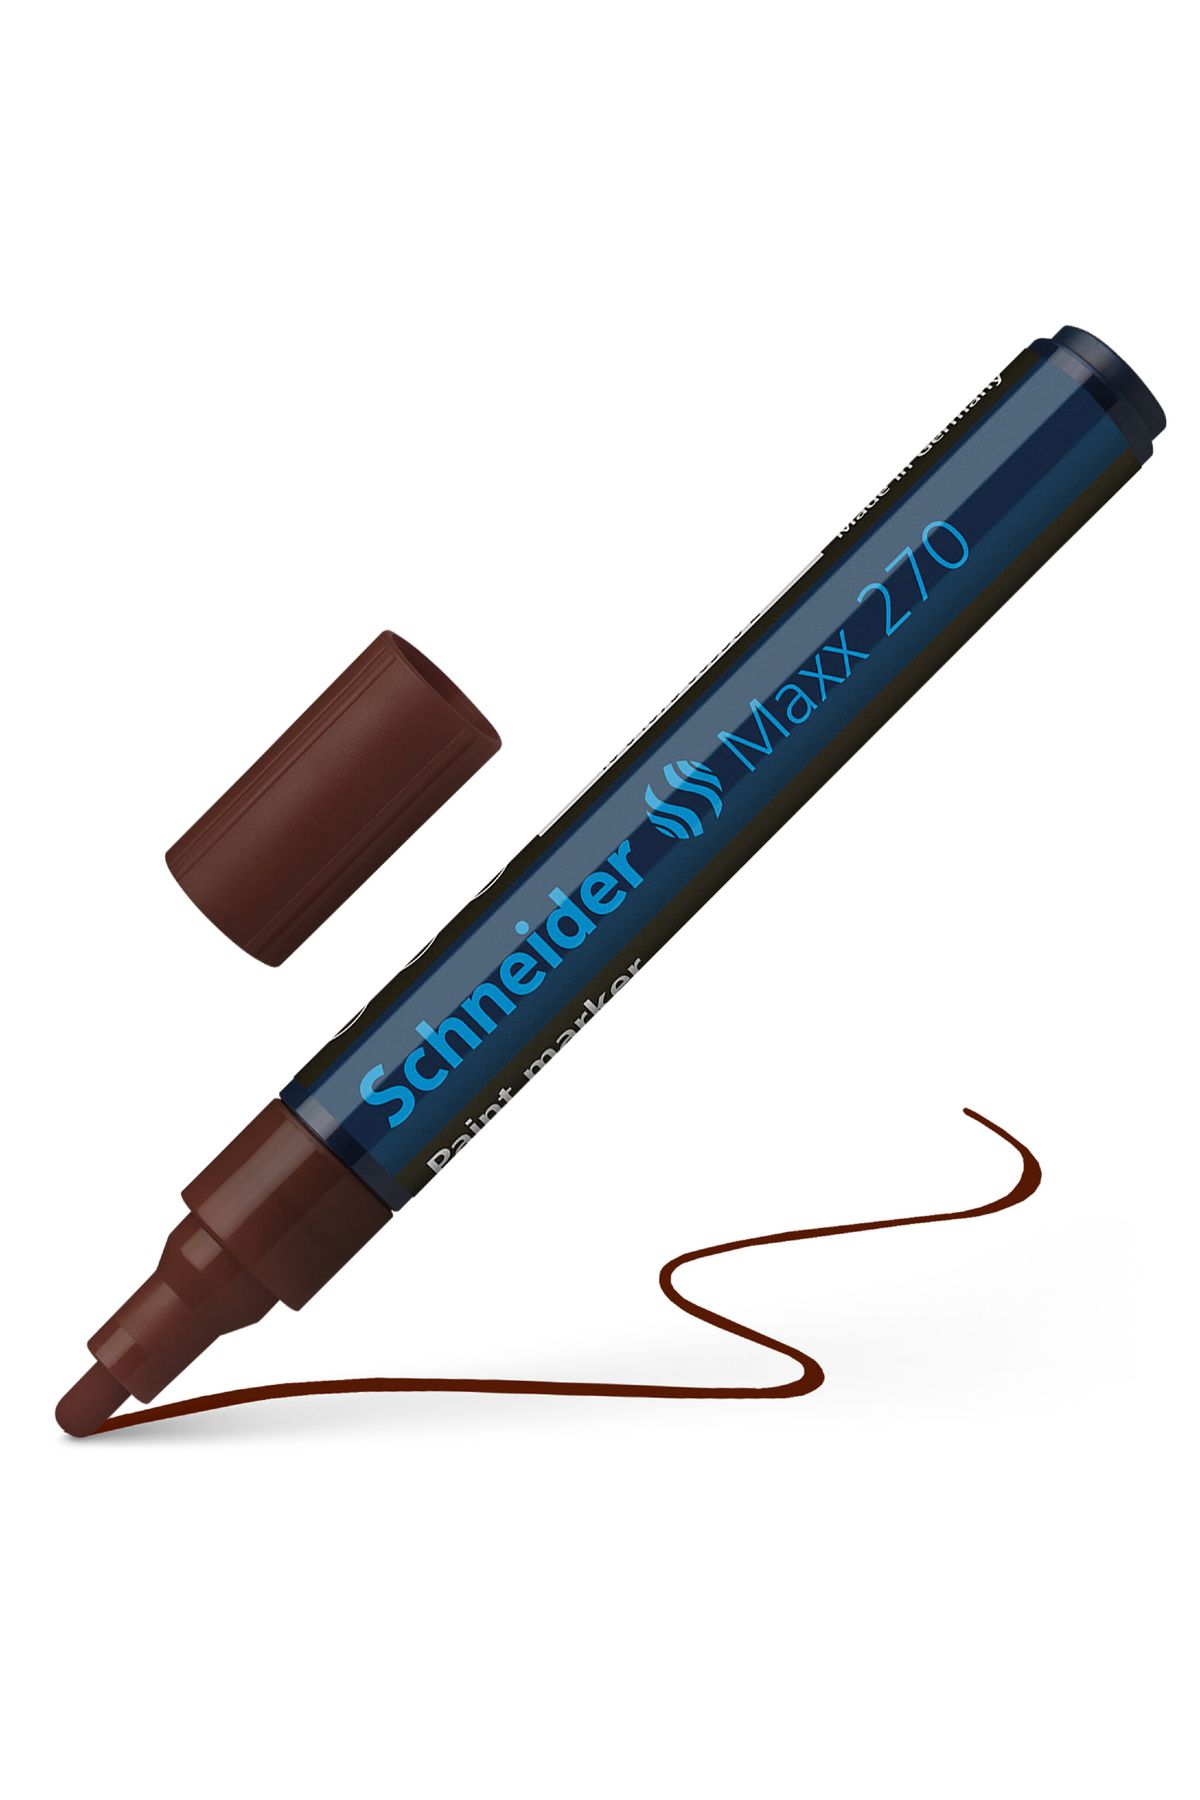 Schneider Maxx 270 Paint Marker İşaretleme Kalemi 1-3 mm Kahverengi